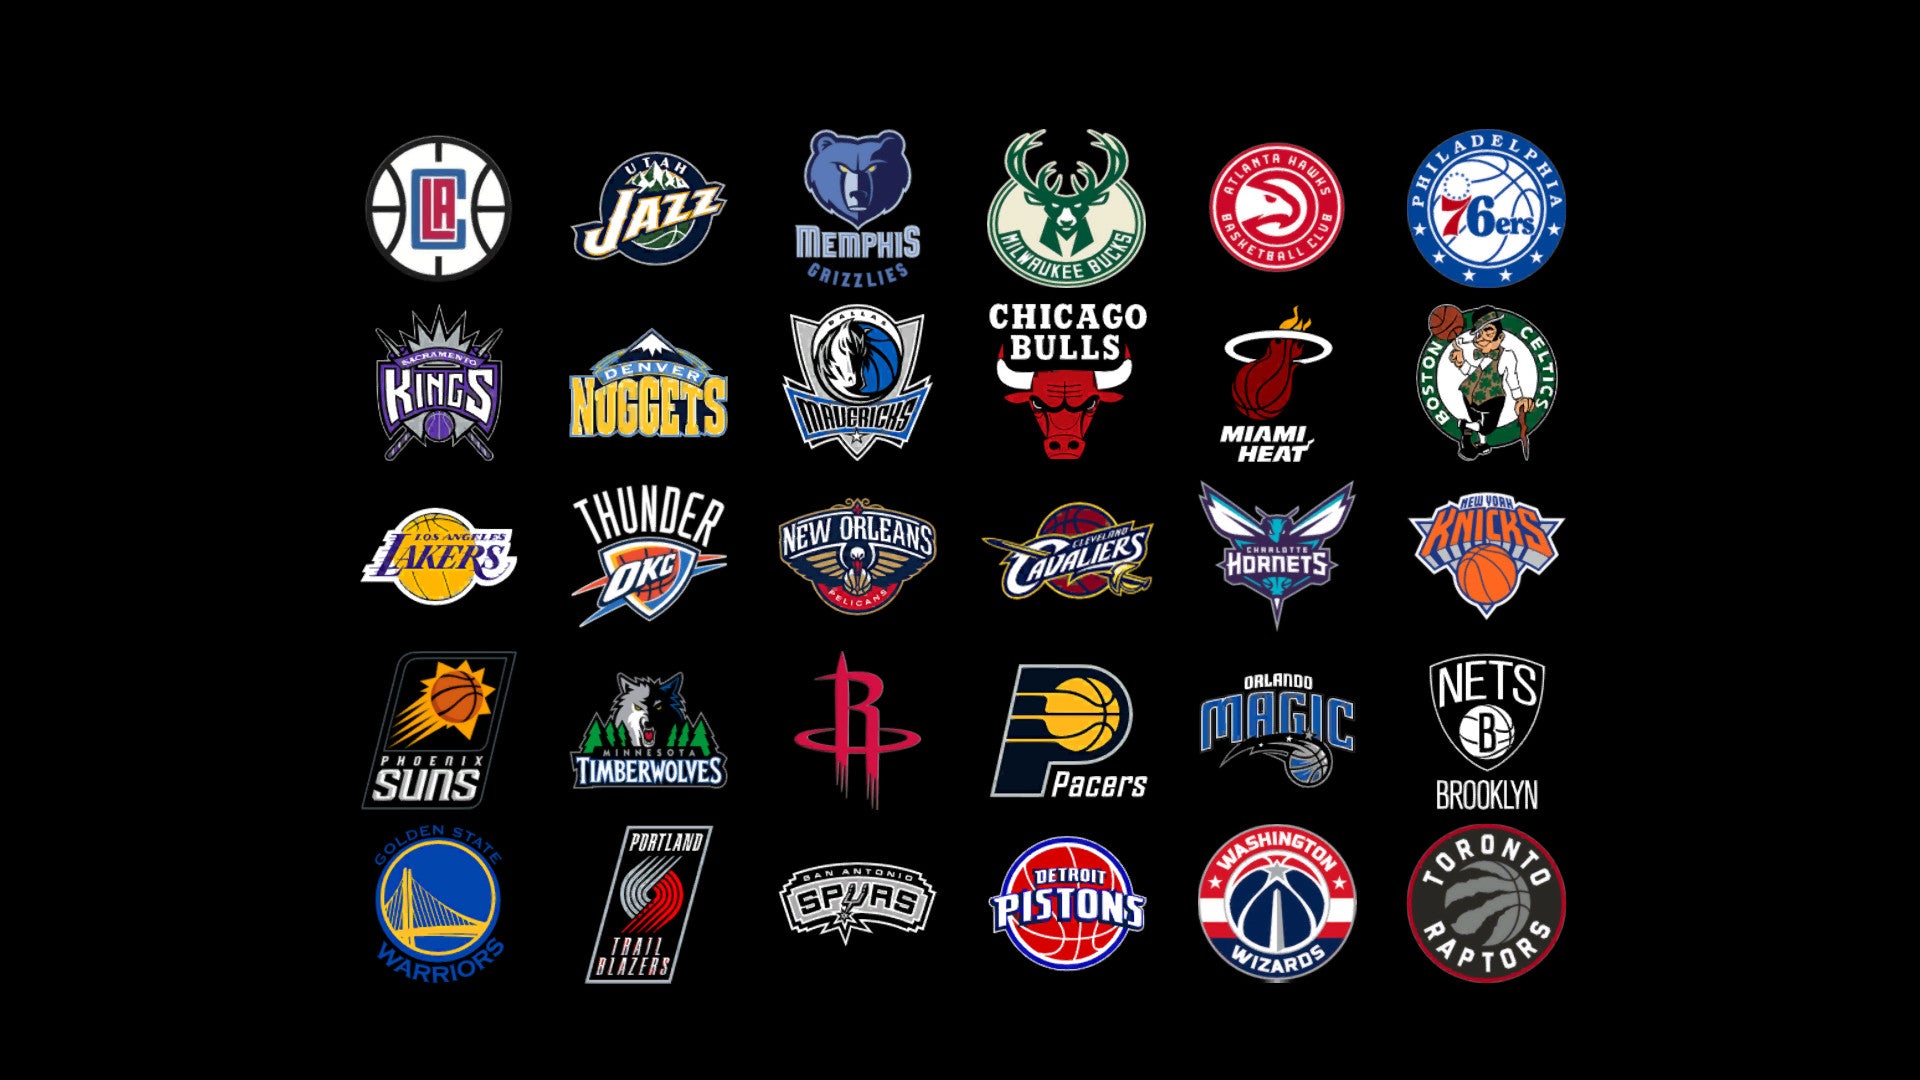 NBA Logos, What Makes them Great?